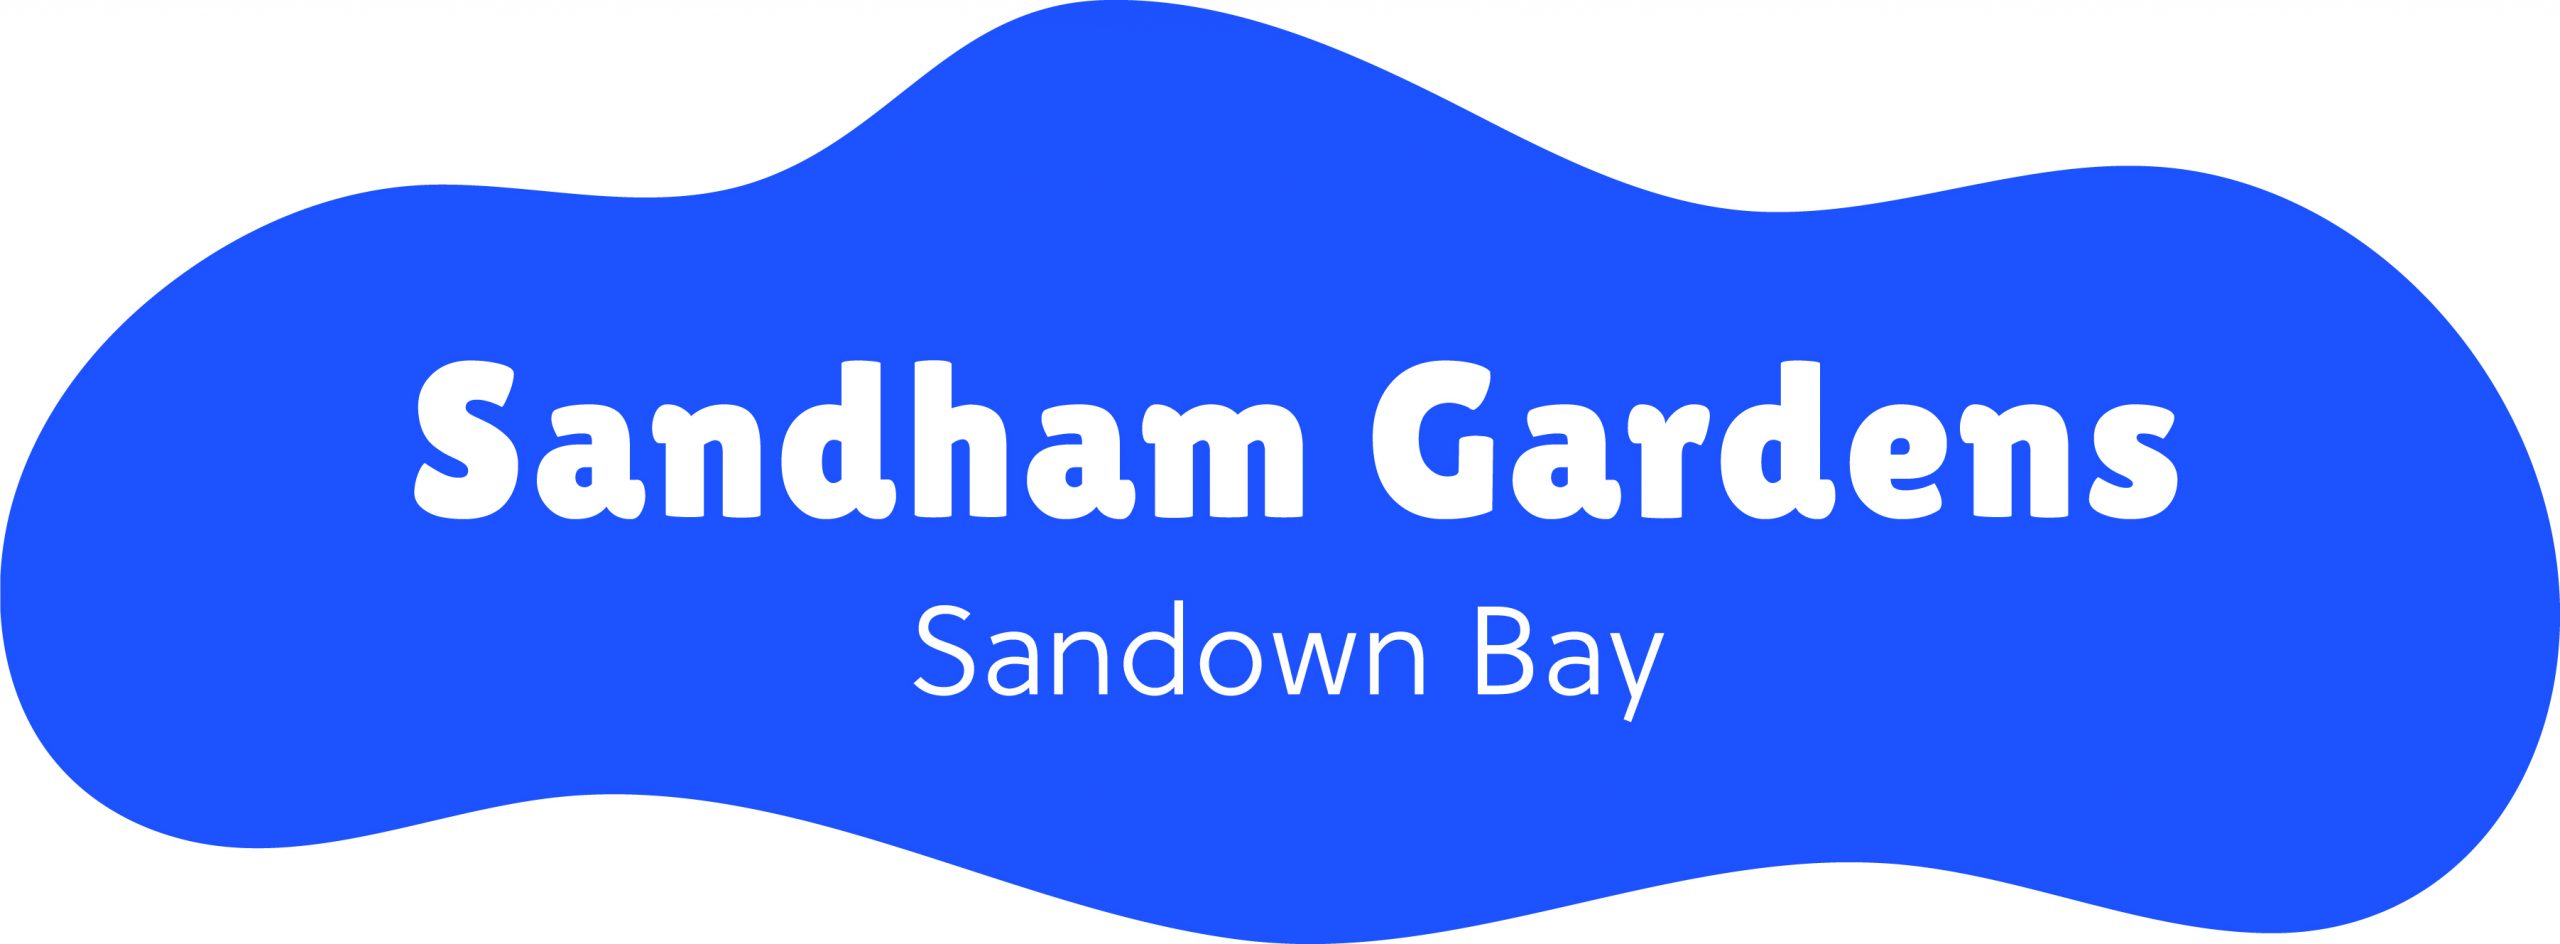 Sandham Gardens logo